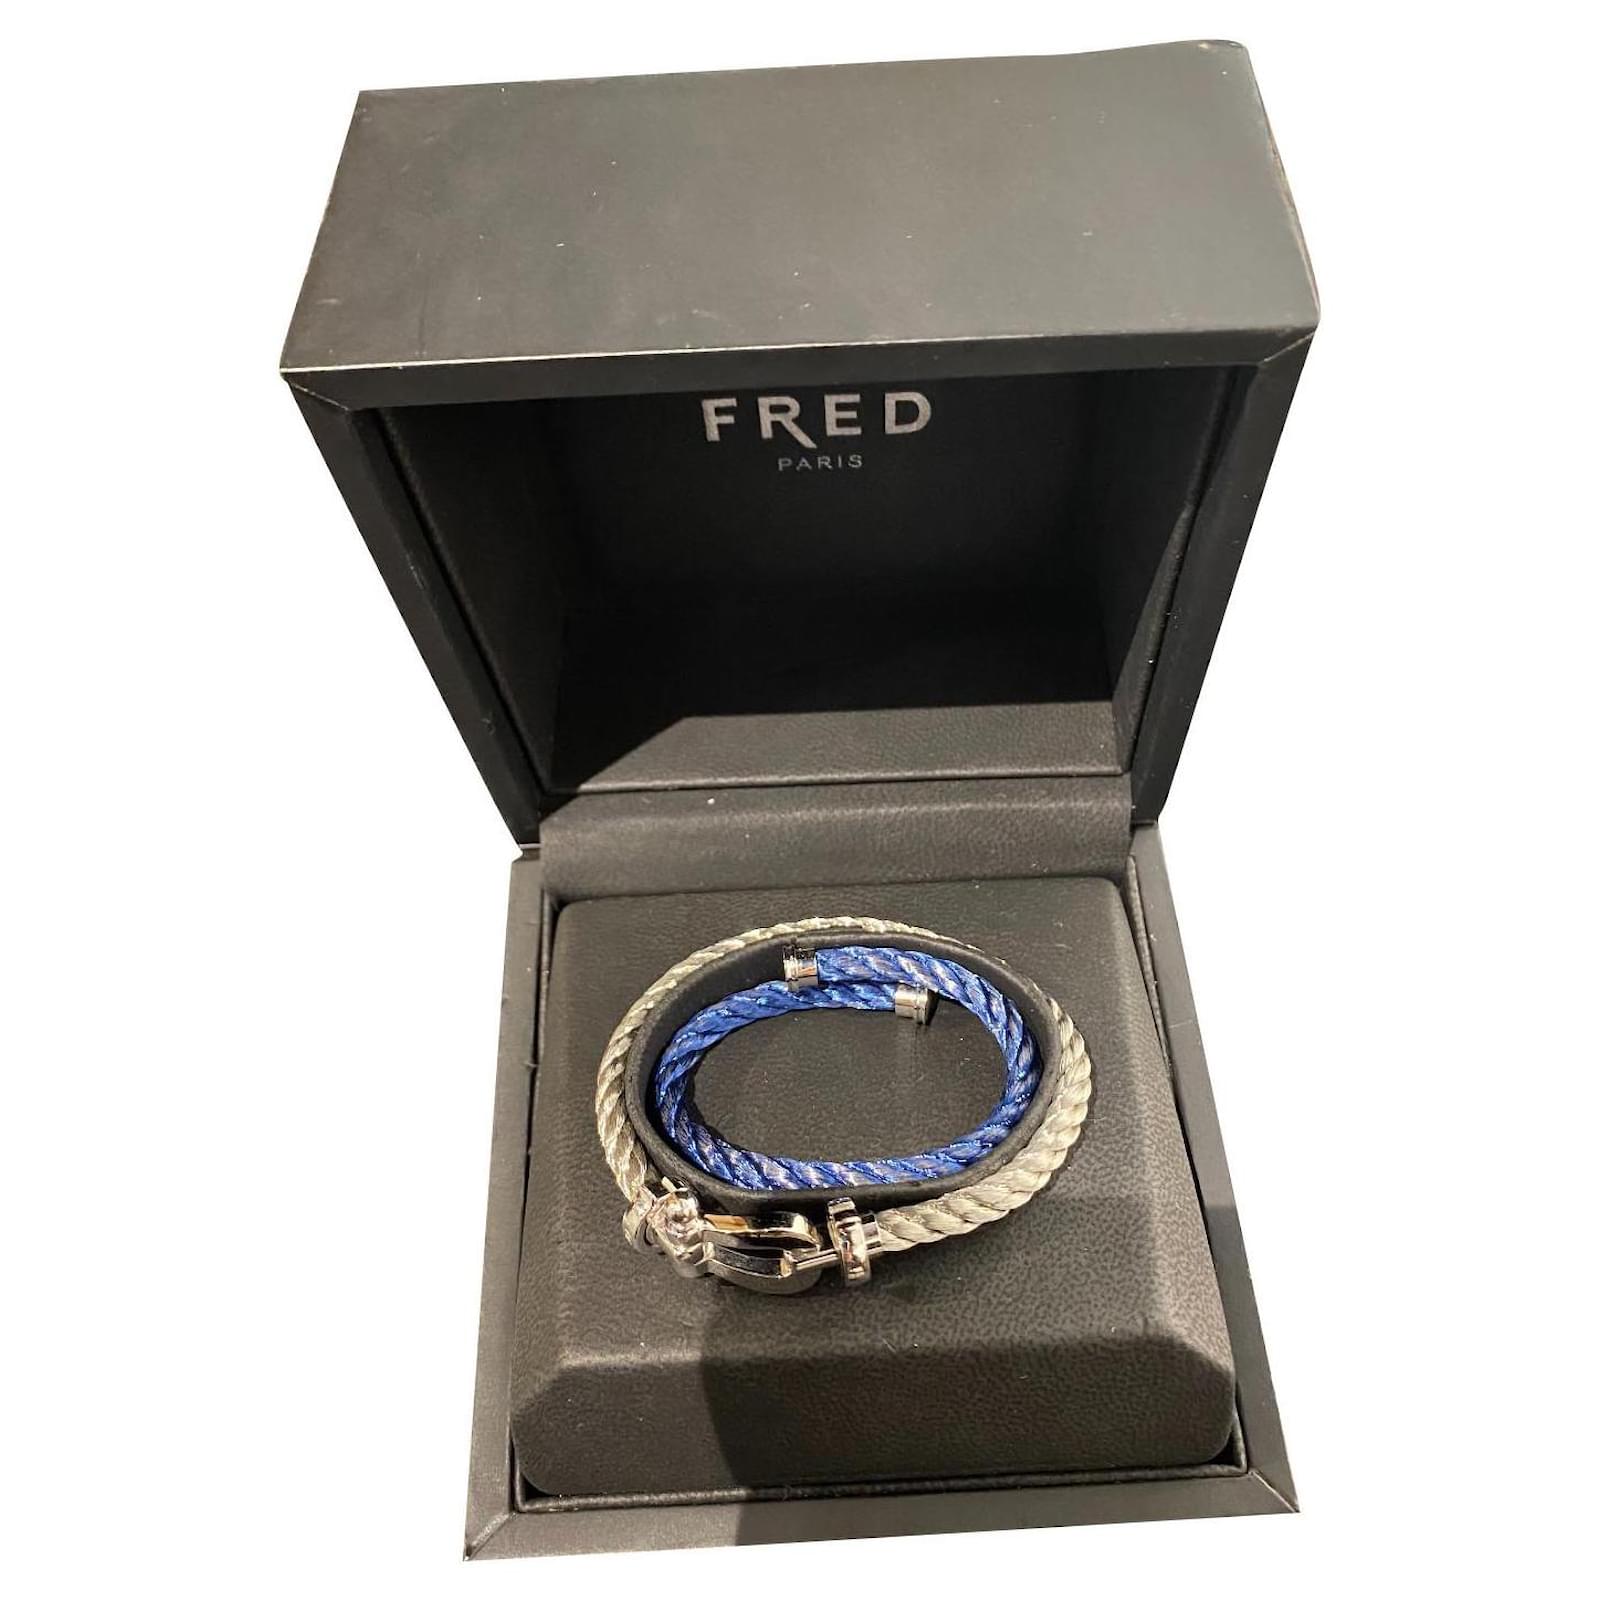 Second Hand Fred Force 10 Bracelets